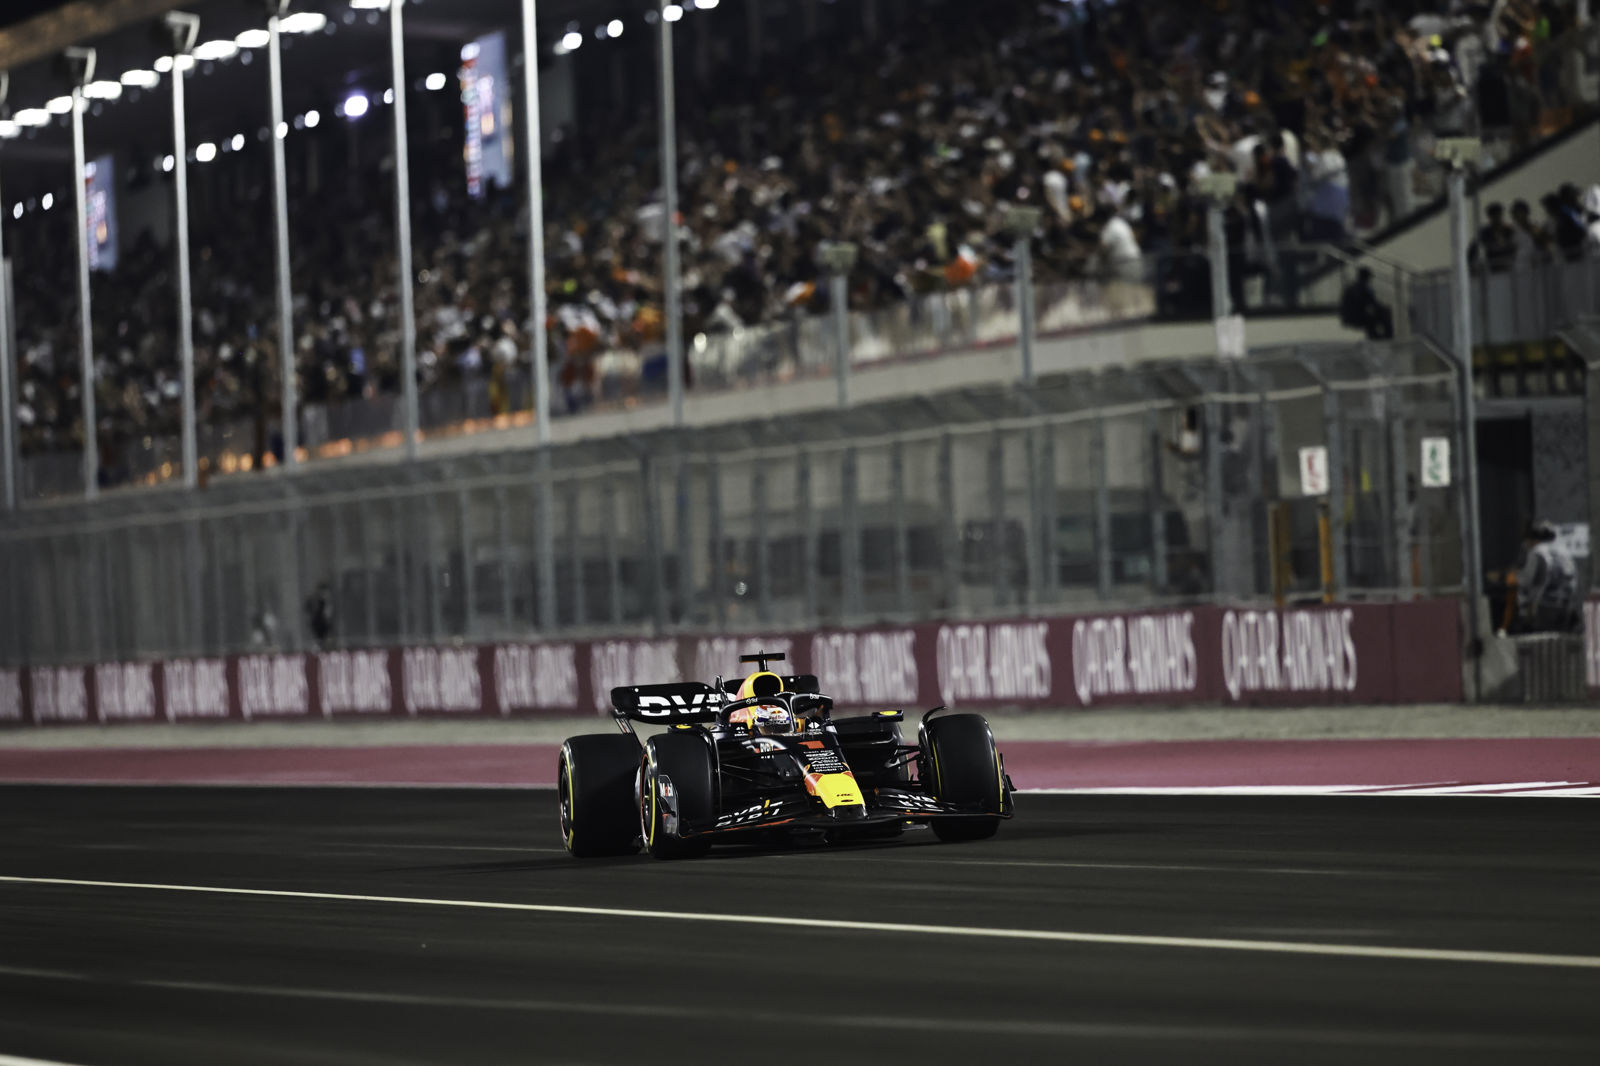 Formule 1 Qatar - City Centre Rotana 5*